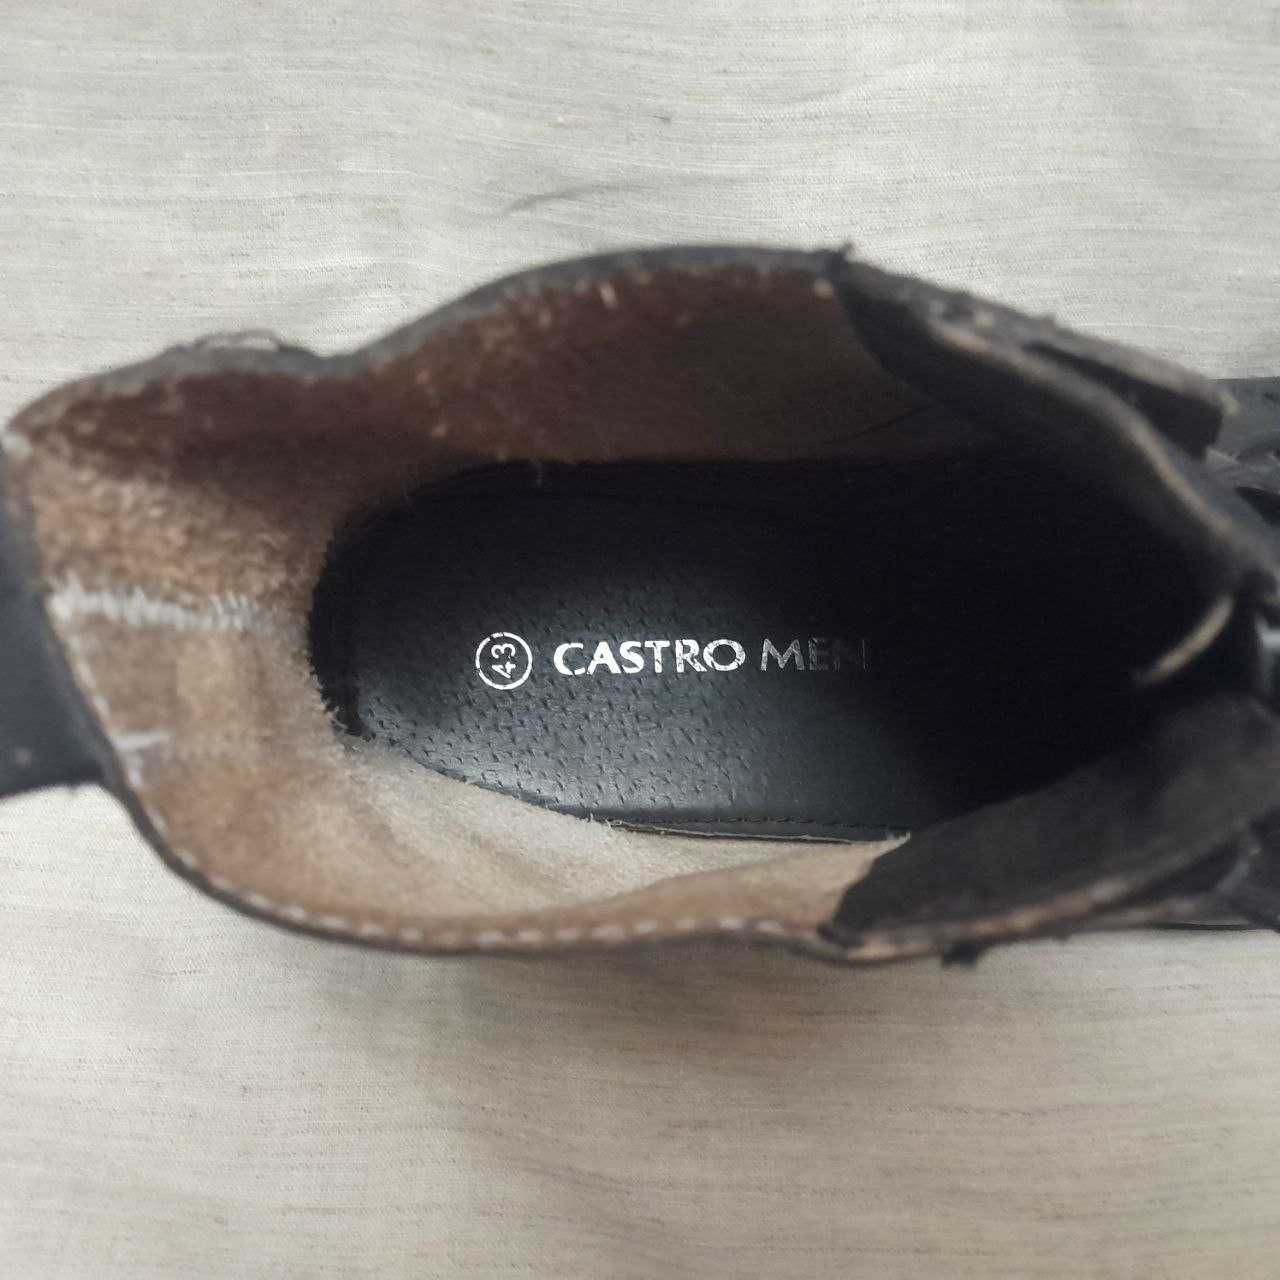 CASTRO MEN ботинки 43 размера